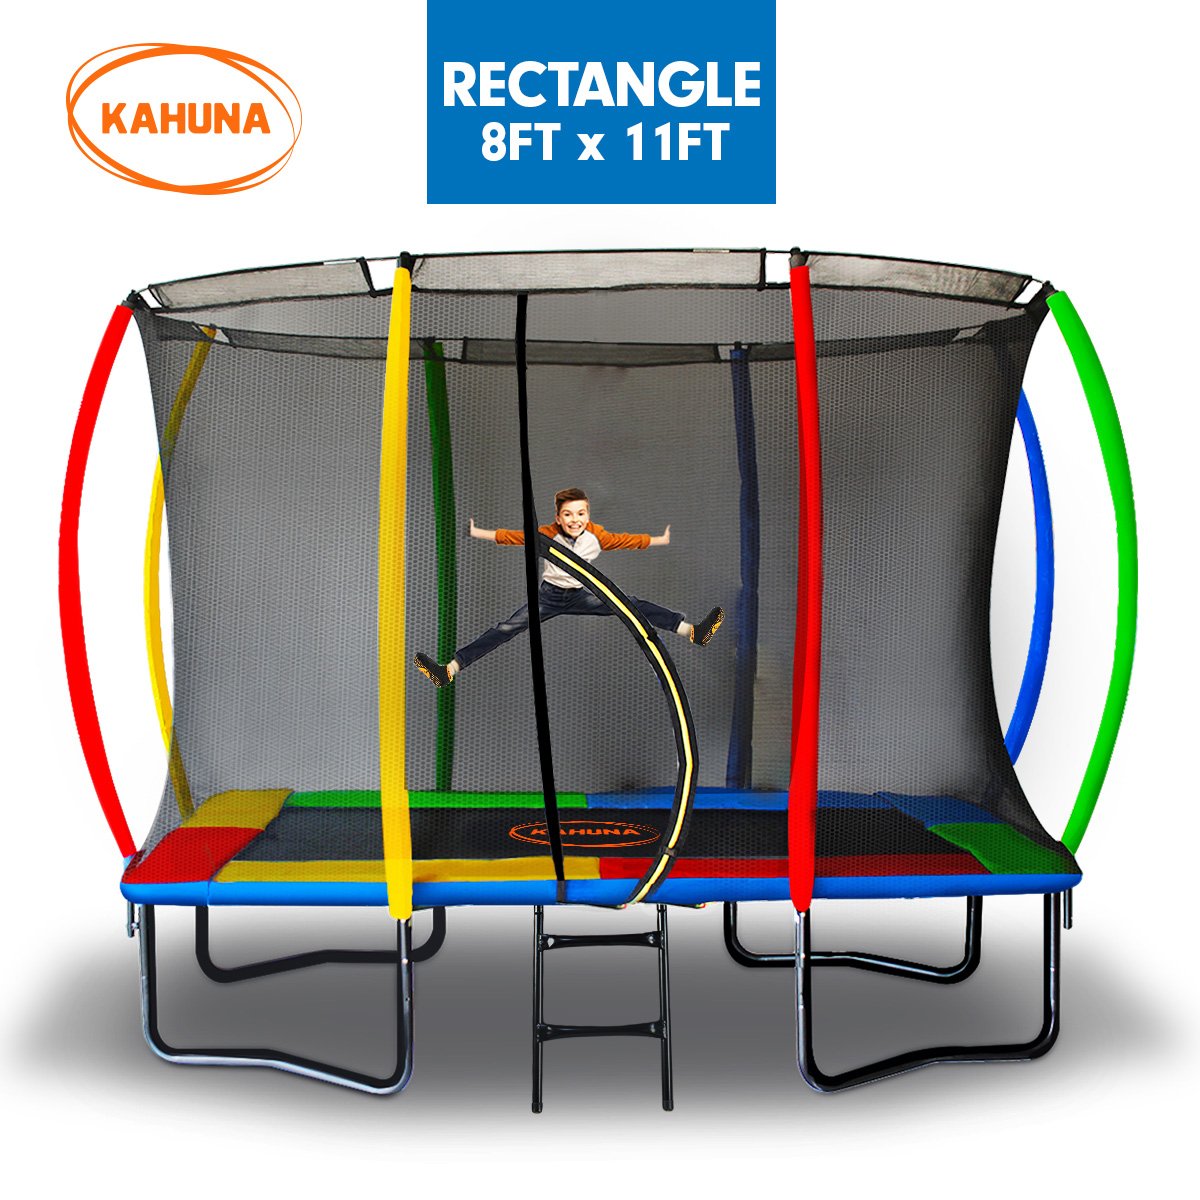 Kahuna Trampoline 8 ft x 11 ft Outdoor Rectangular Rainbow